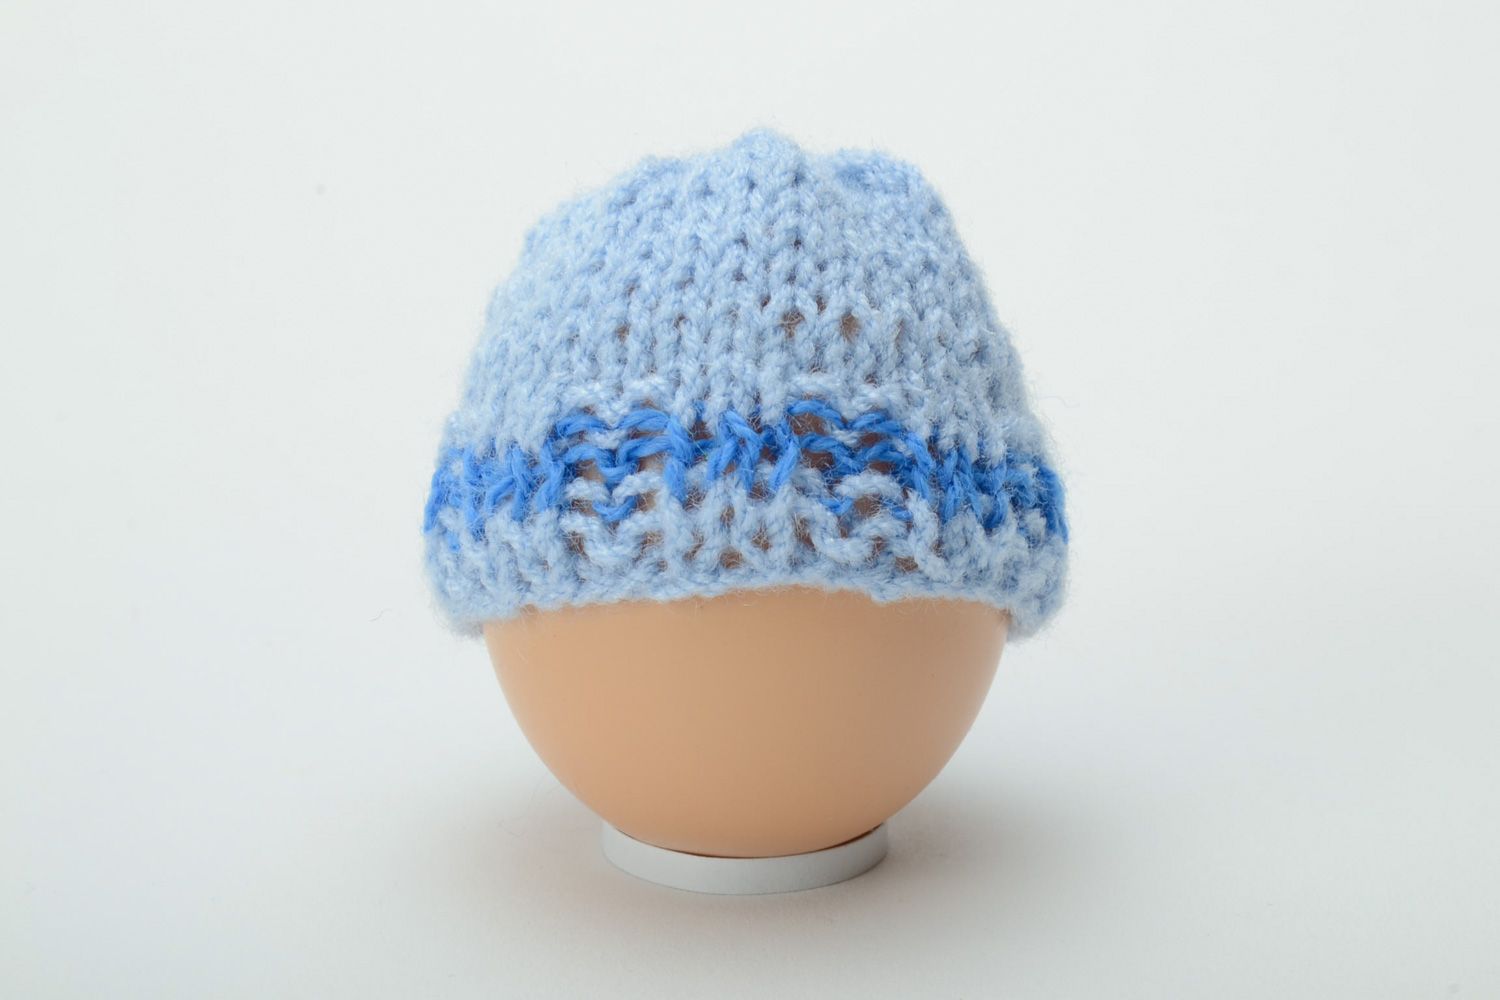 Homemade blue knitted Easter egg cozy photo 2